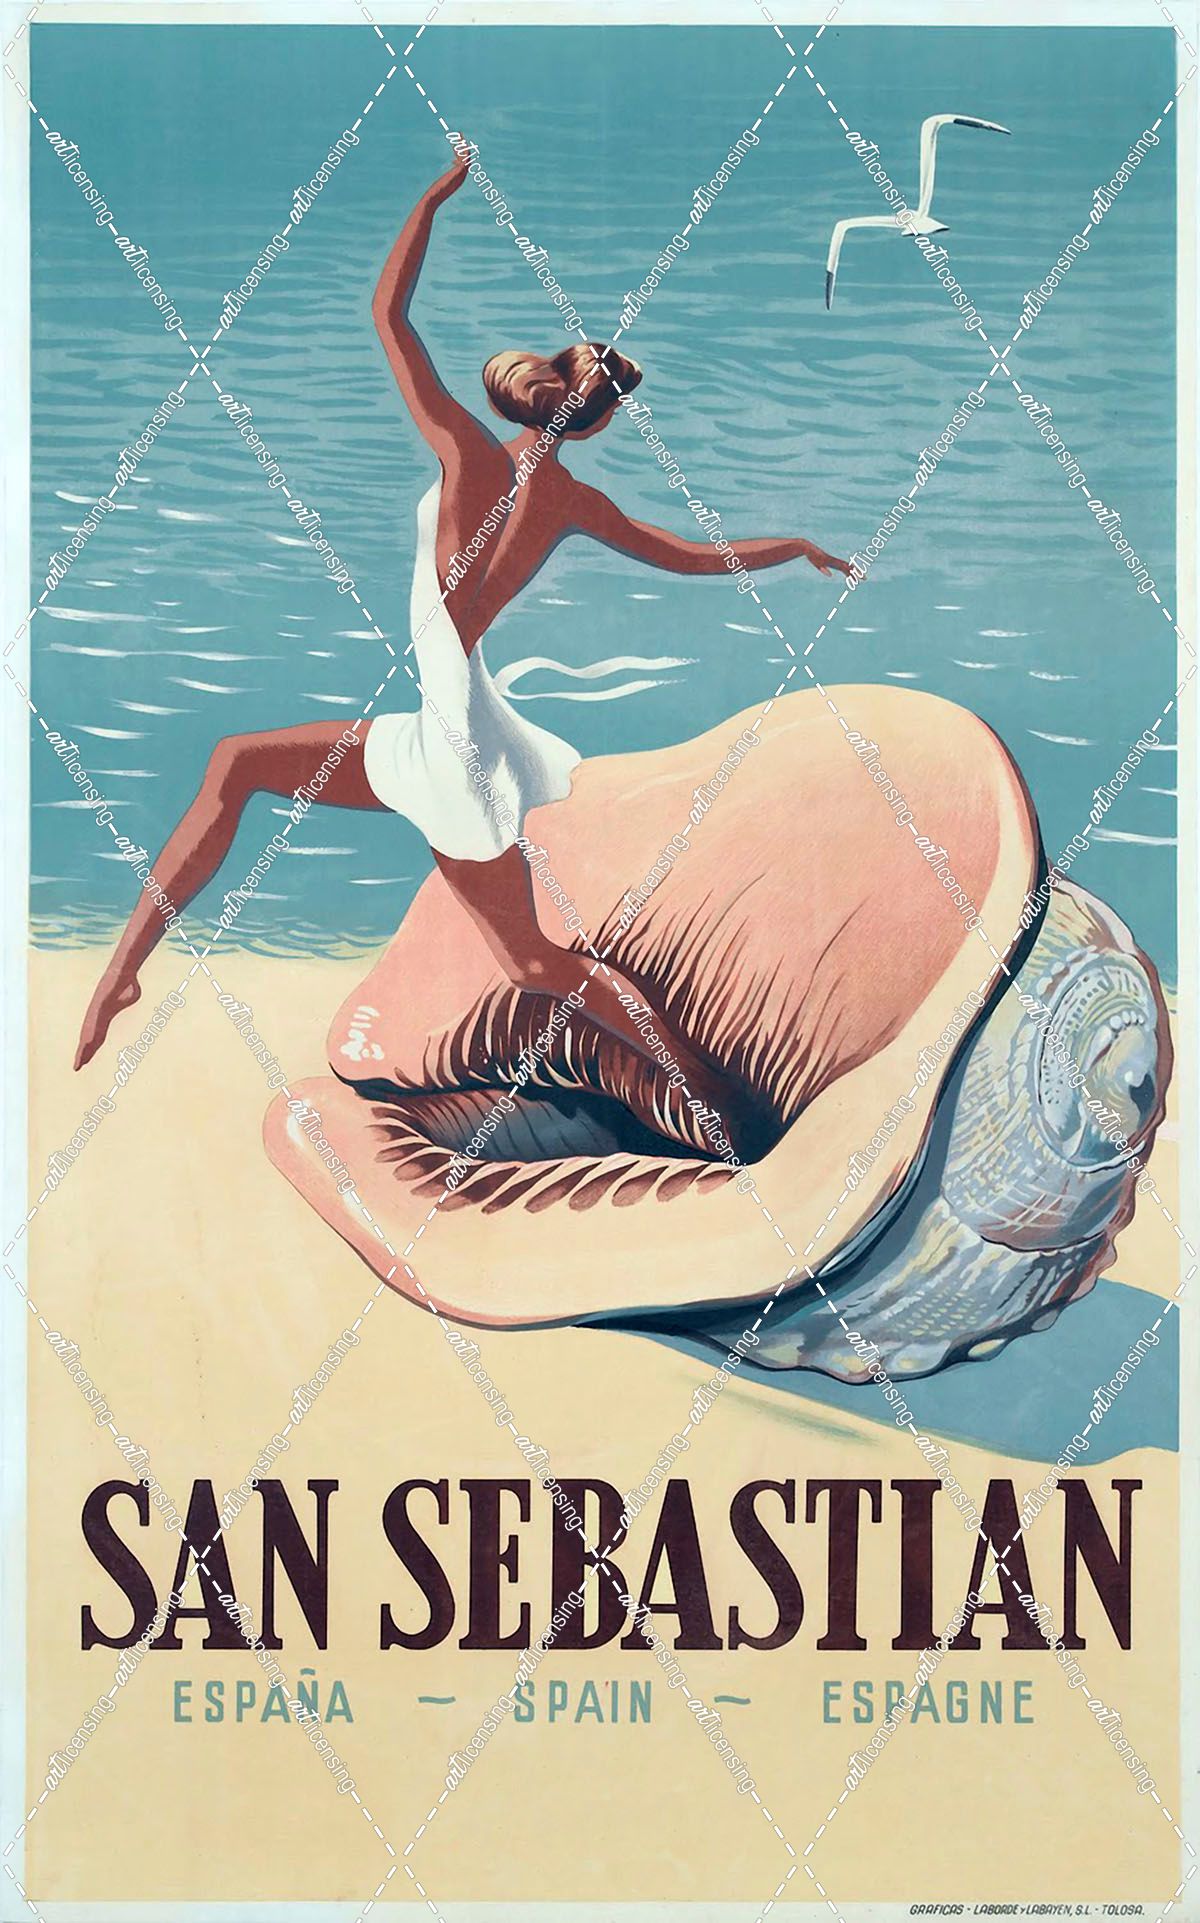 San Sebas